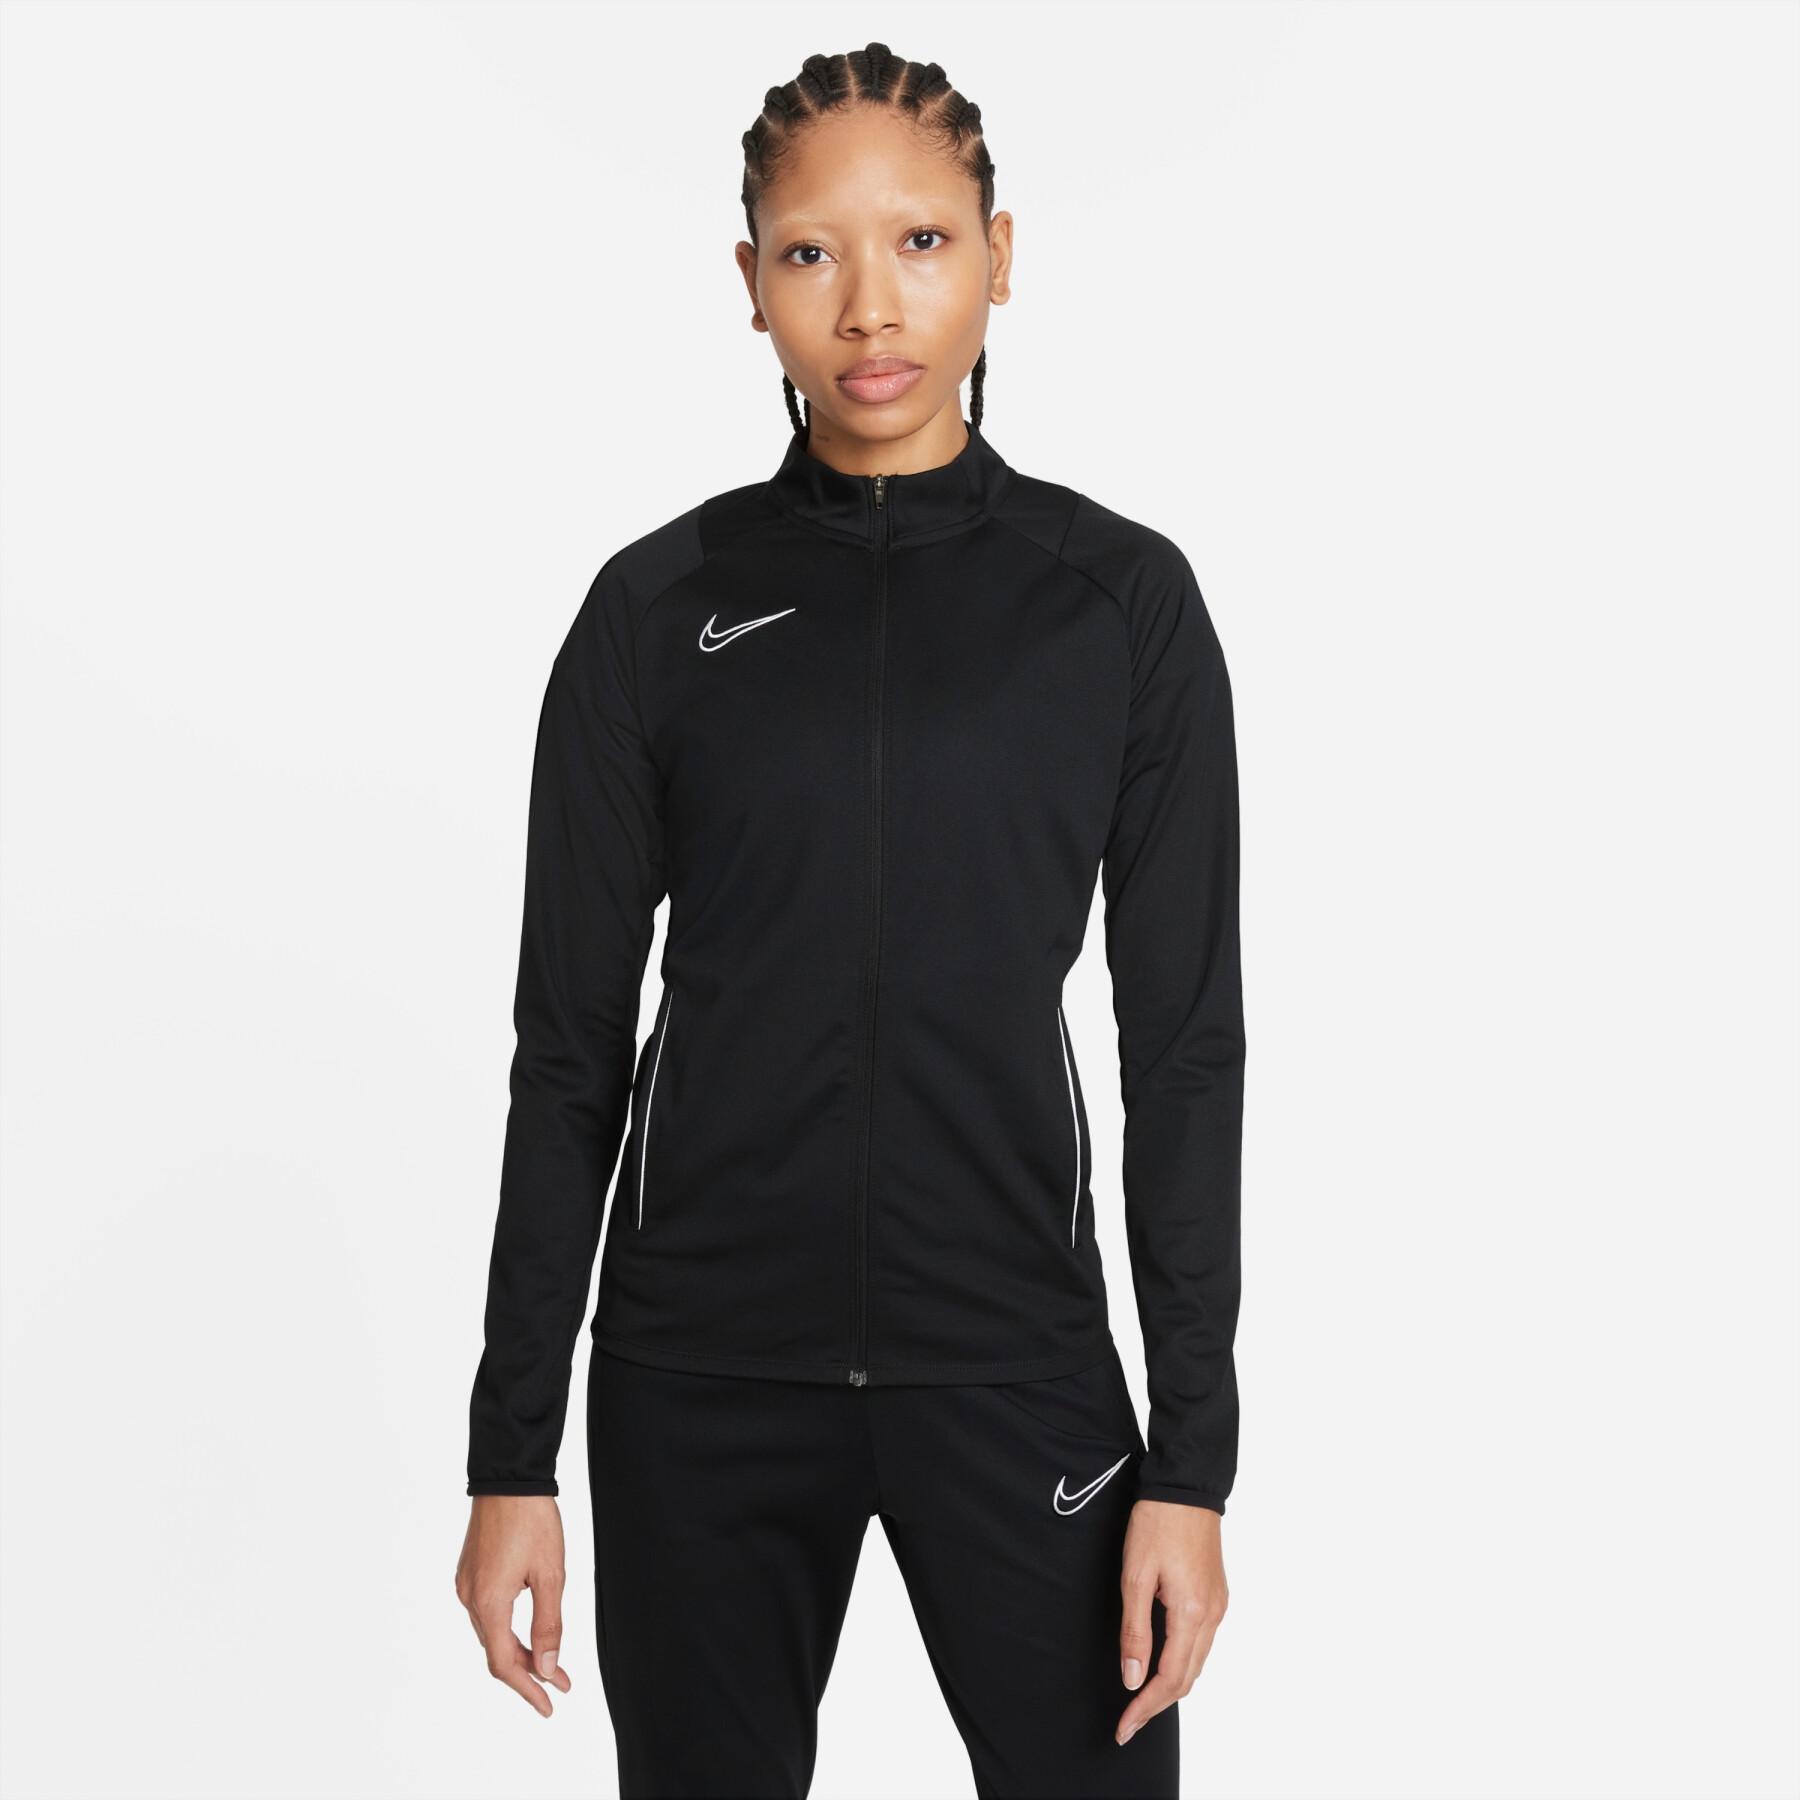 Women's tracksuit Nike Dynamic Fit